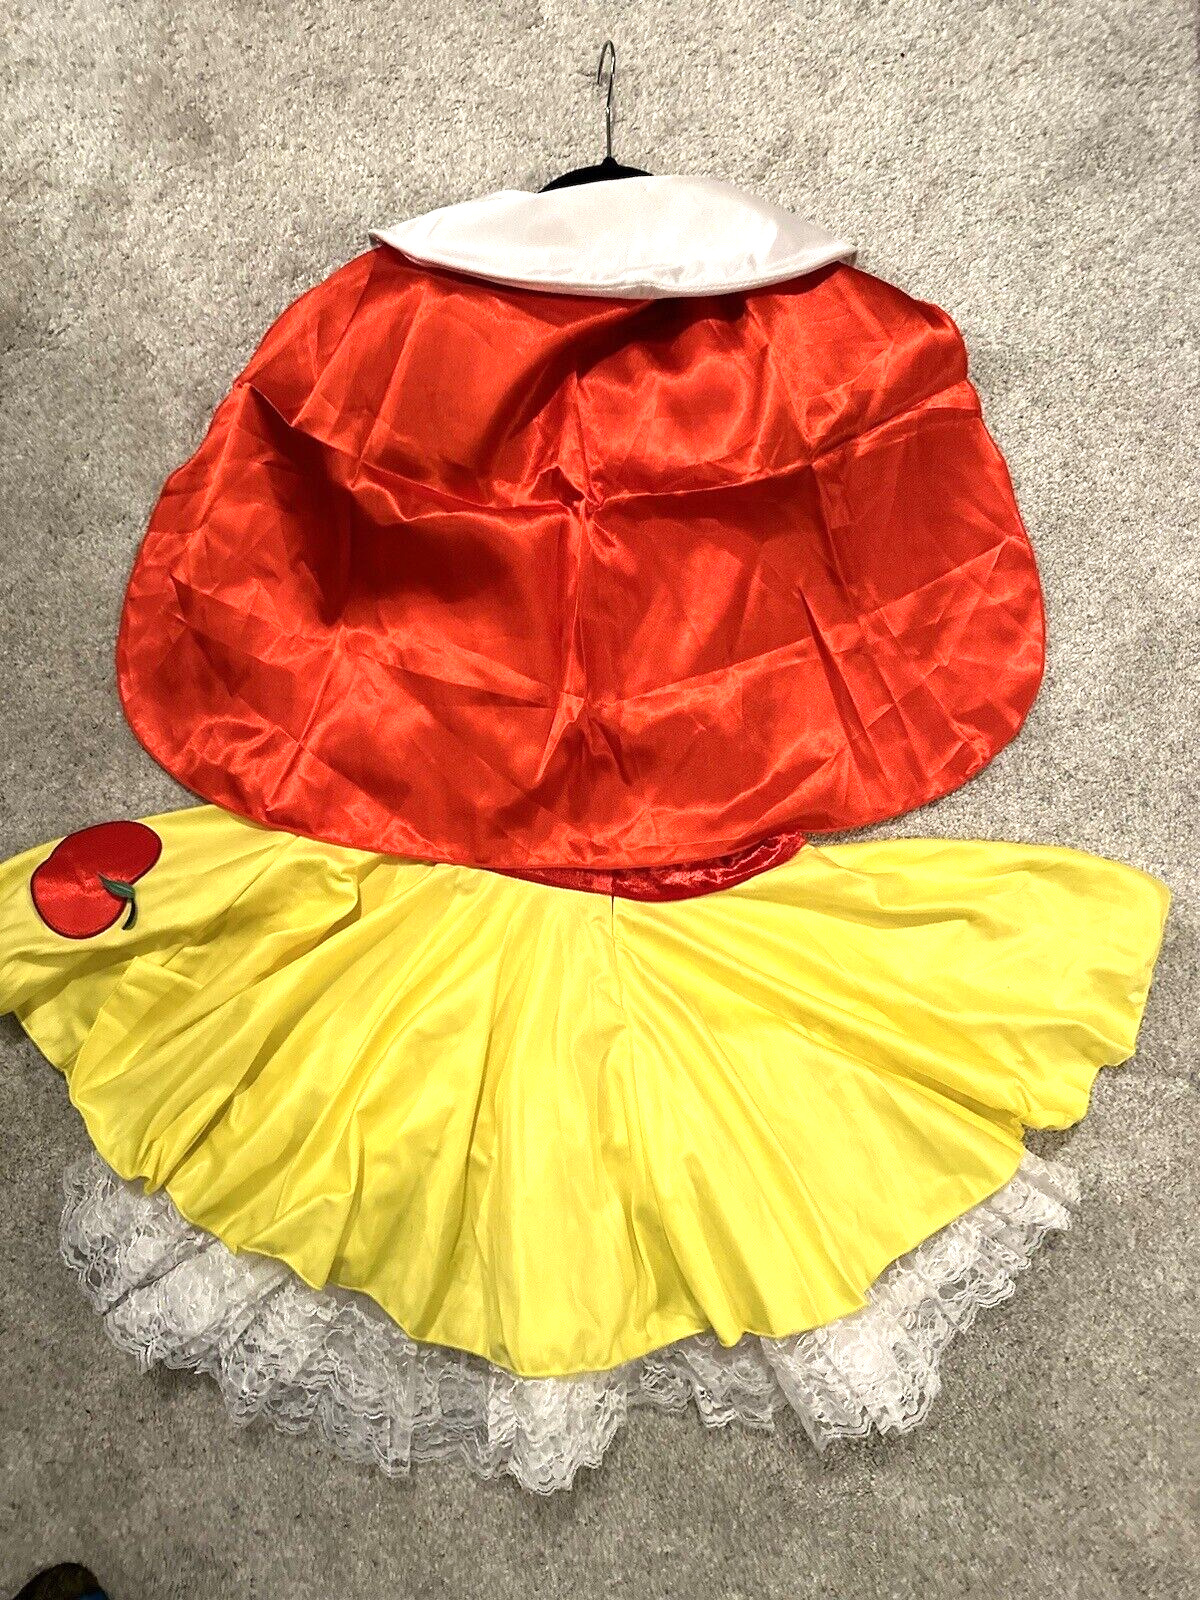 Princess costume 3 Piece adult size m/l Halloween… - image 3